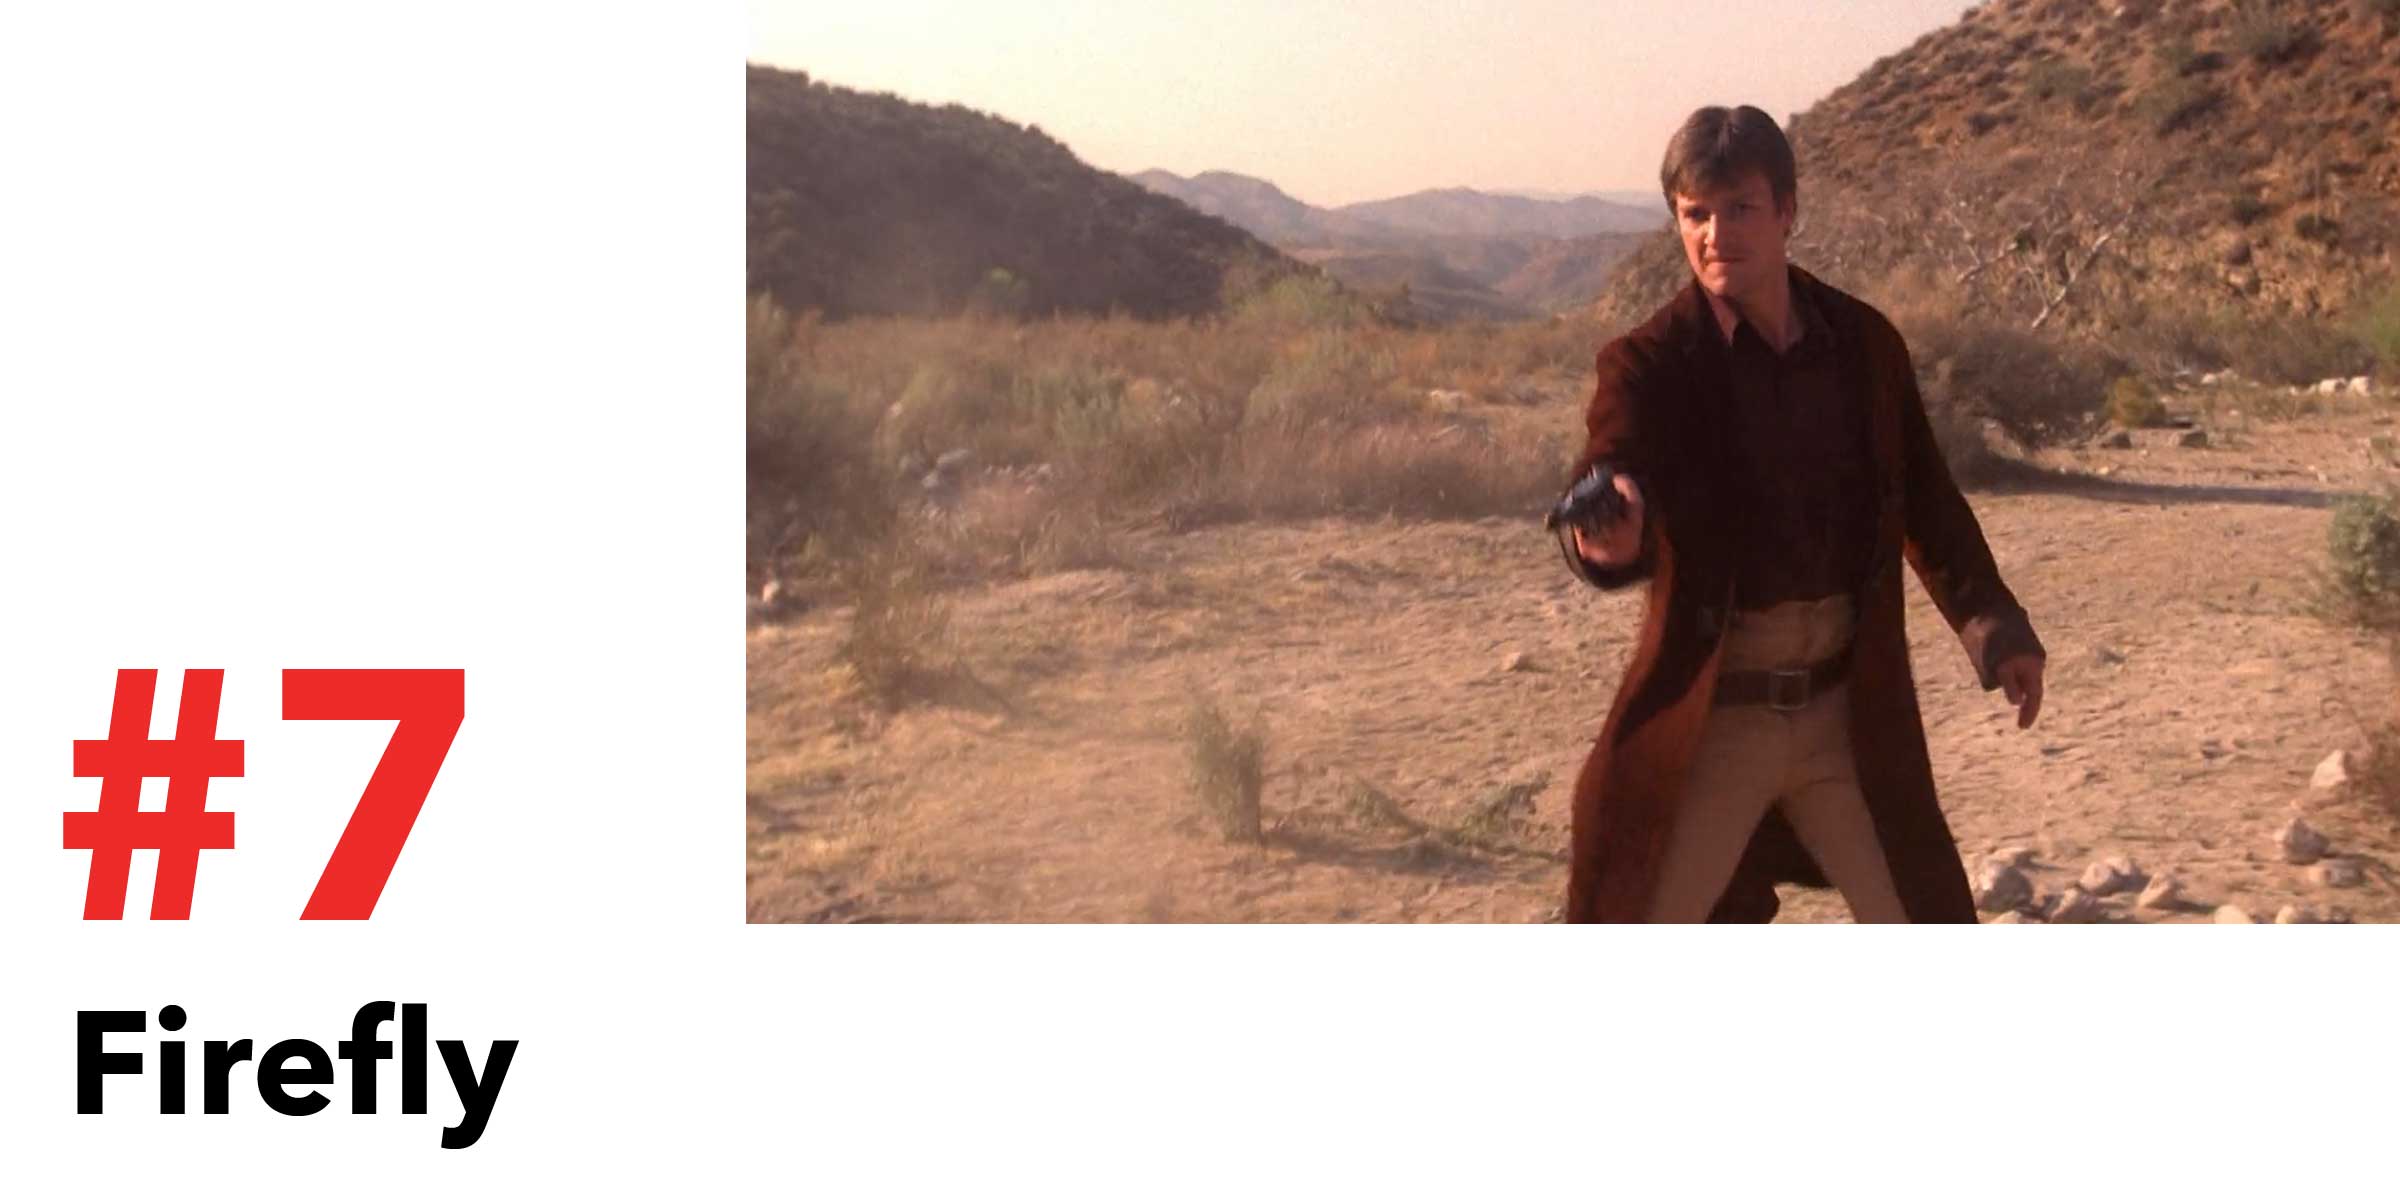 A man, Nathan Fillion, stands in a desert with a gun drawn.